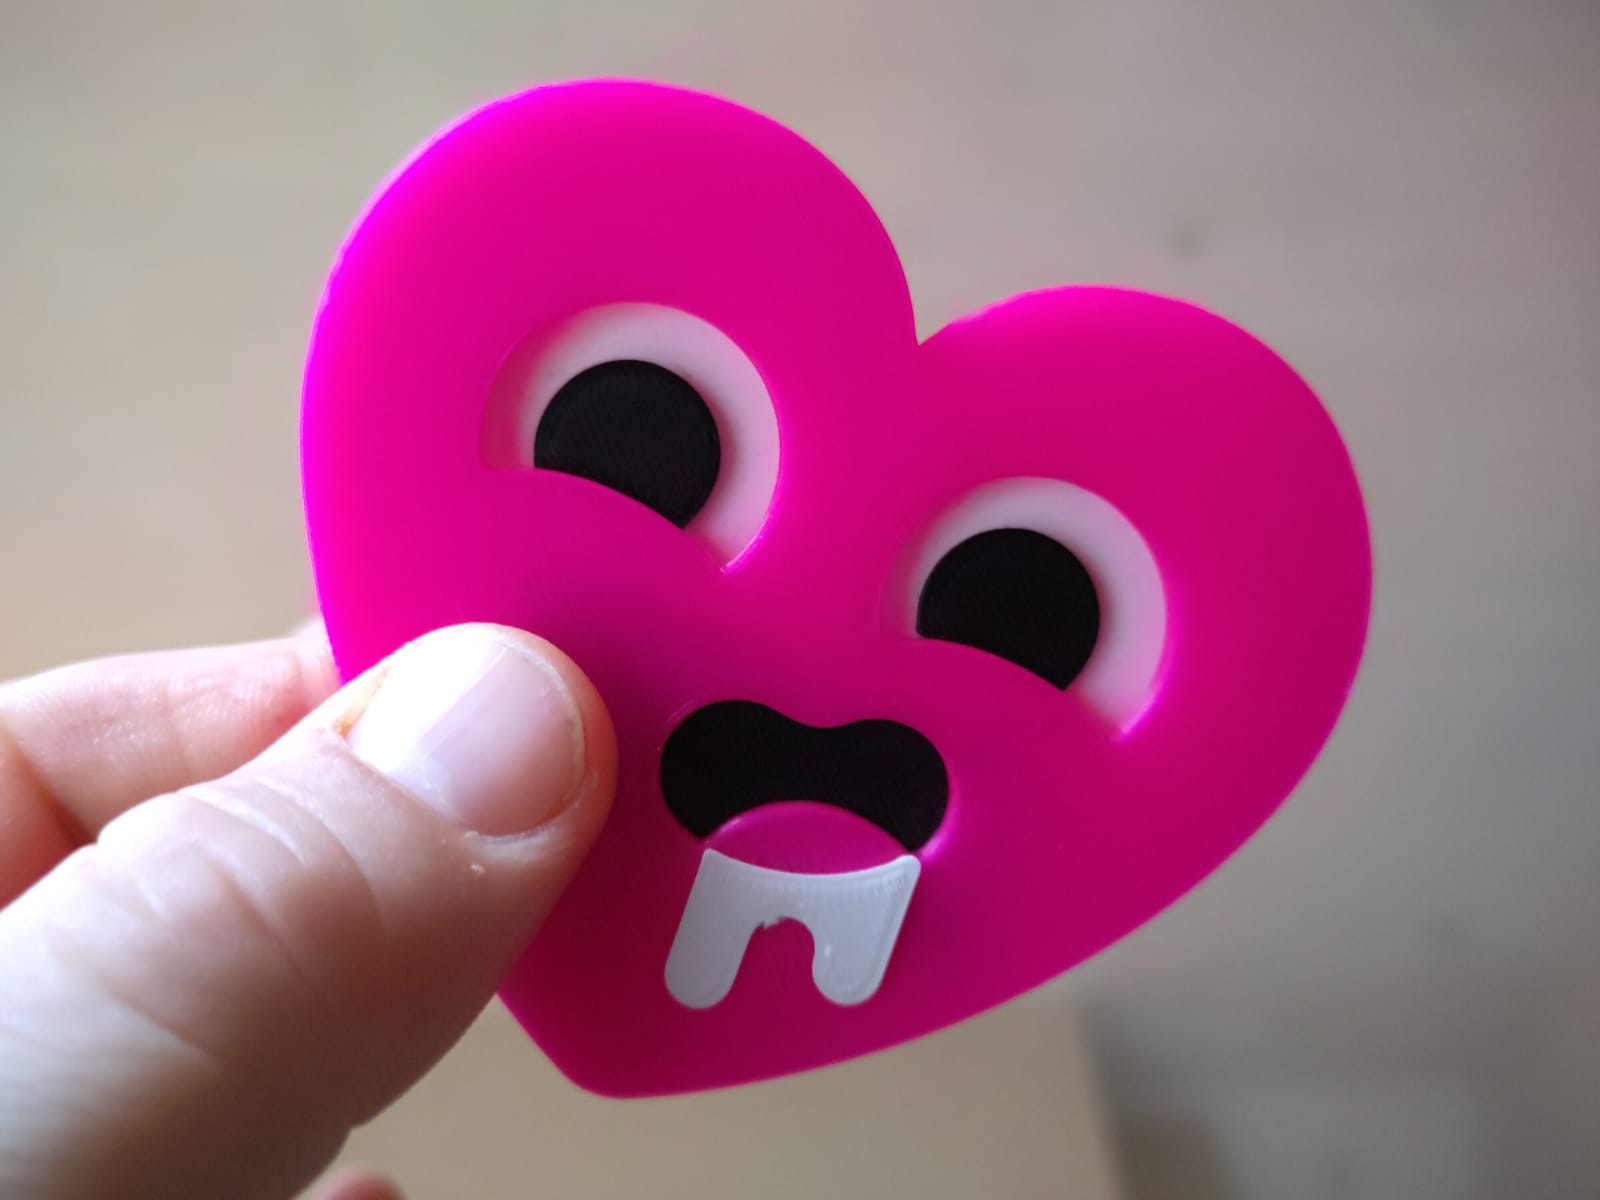 The "horny heart" emoji valentine badge